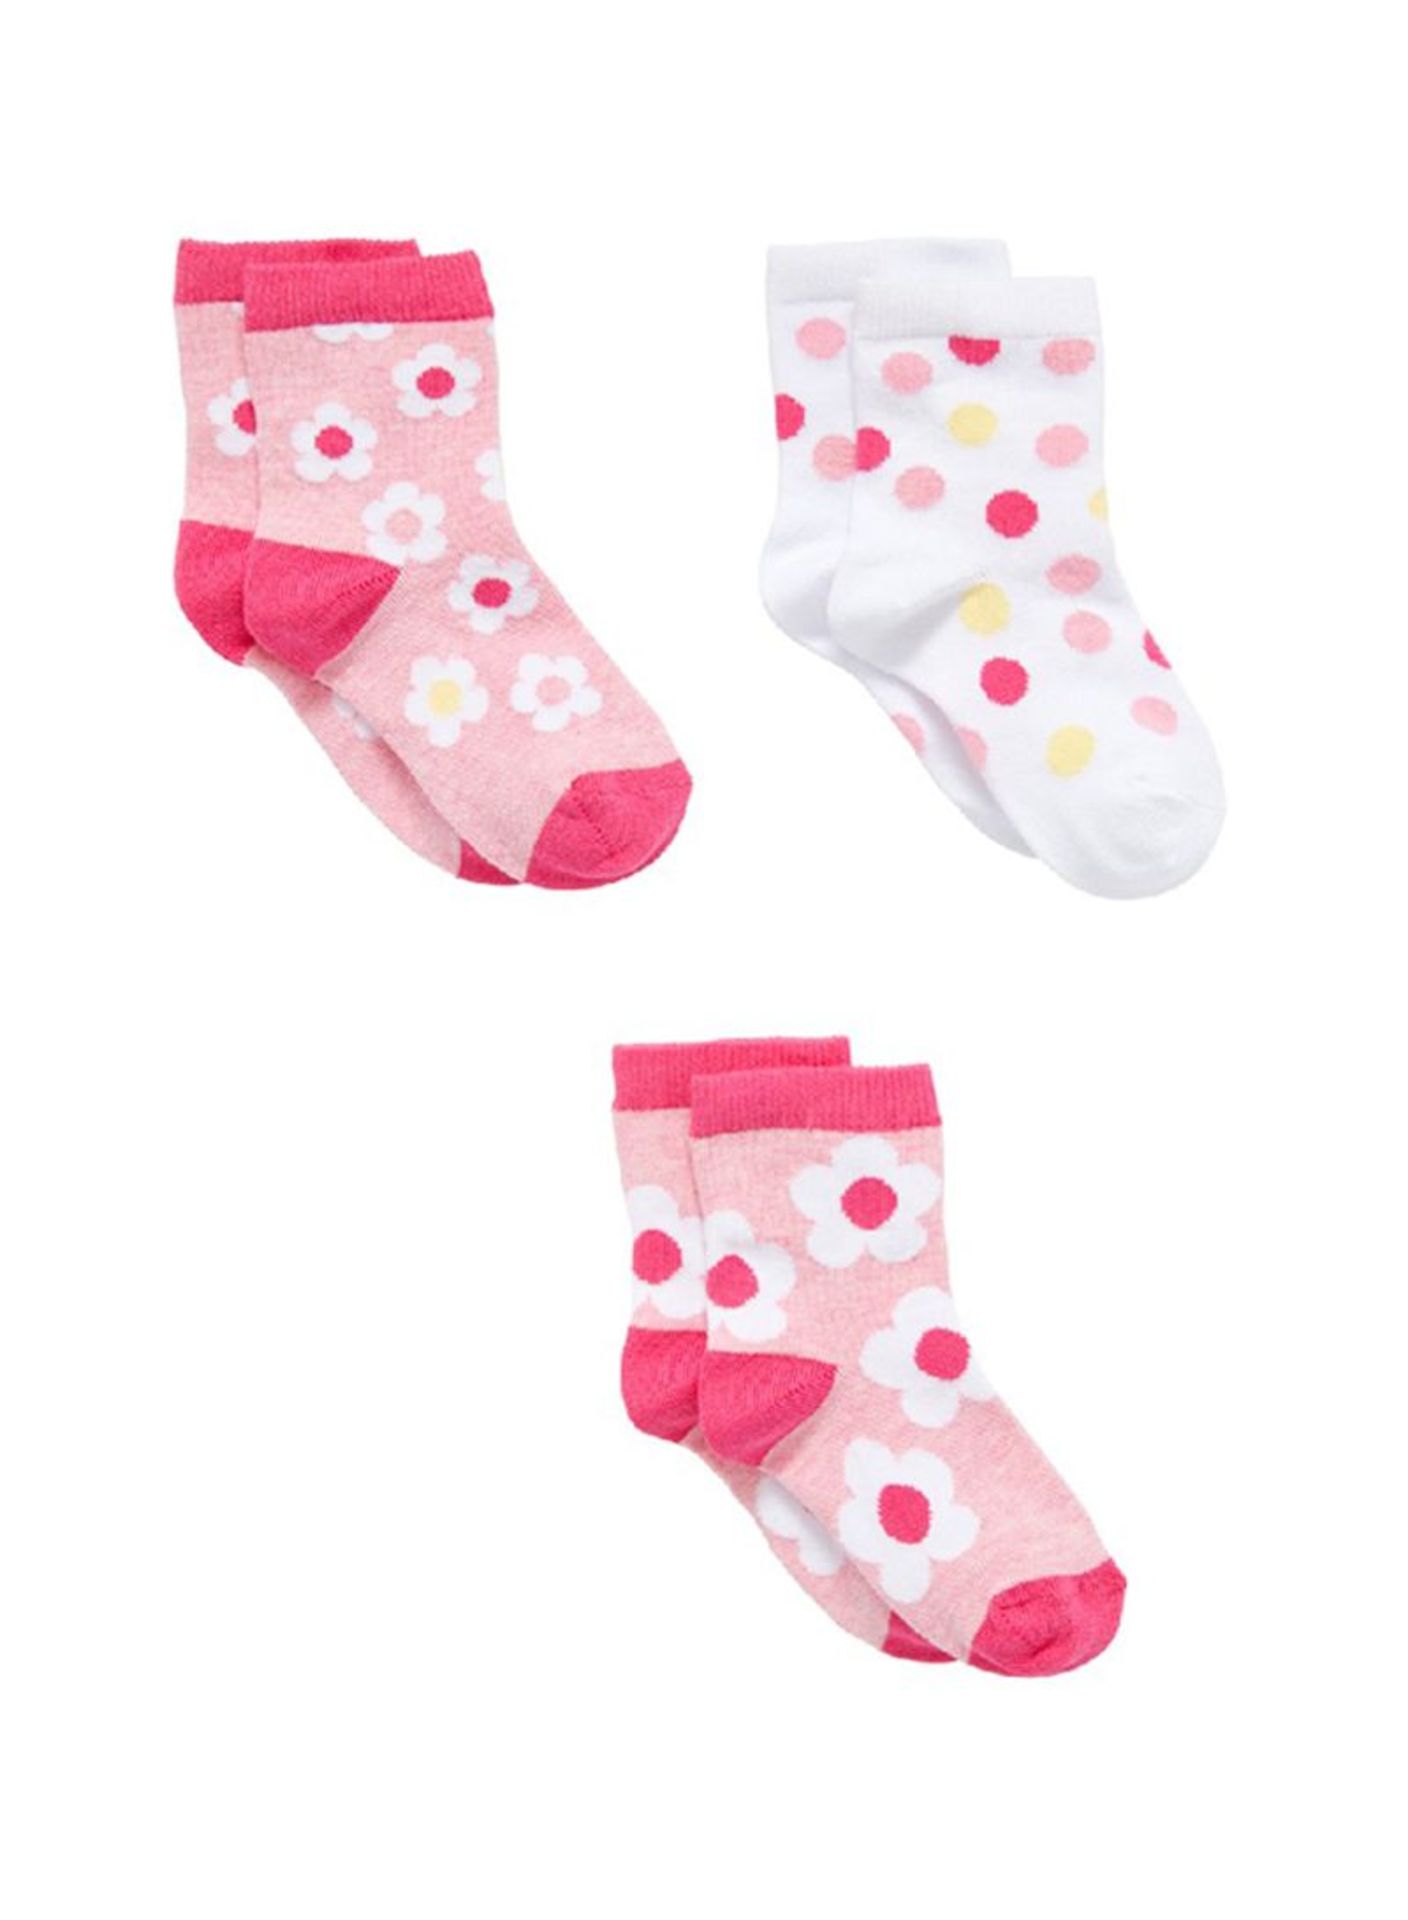 Bulk Mothercare Socks Joblot Rrp £2,010 - No Reserve - Image 6 of 11